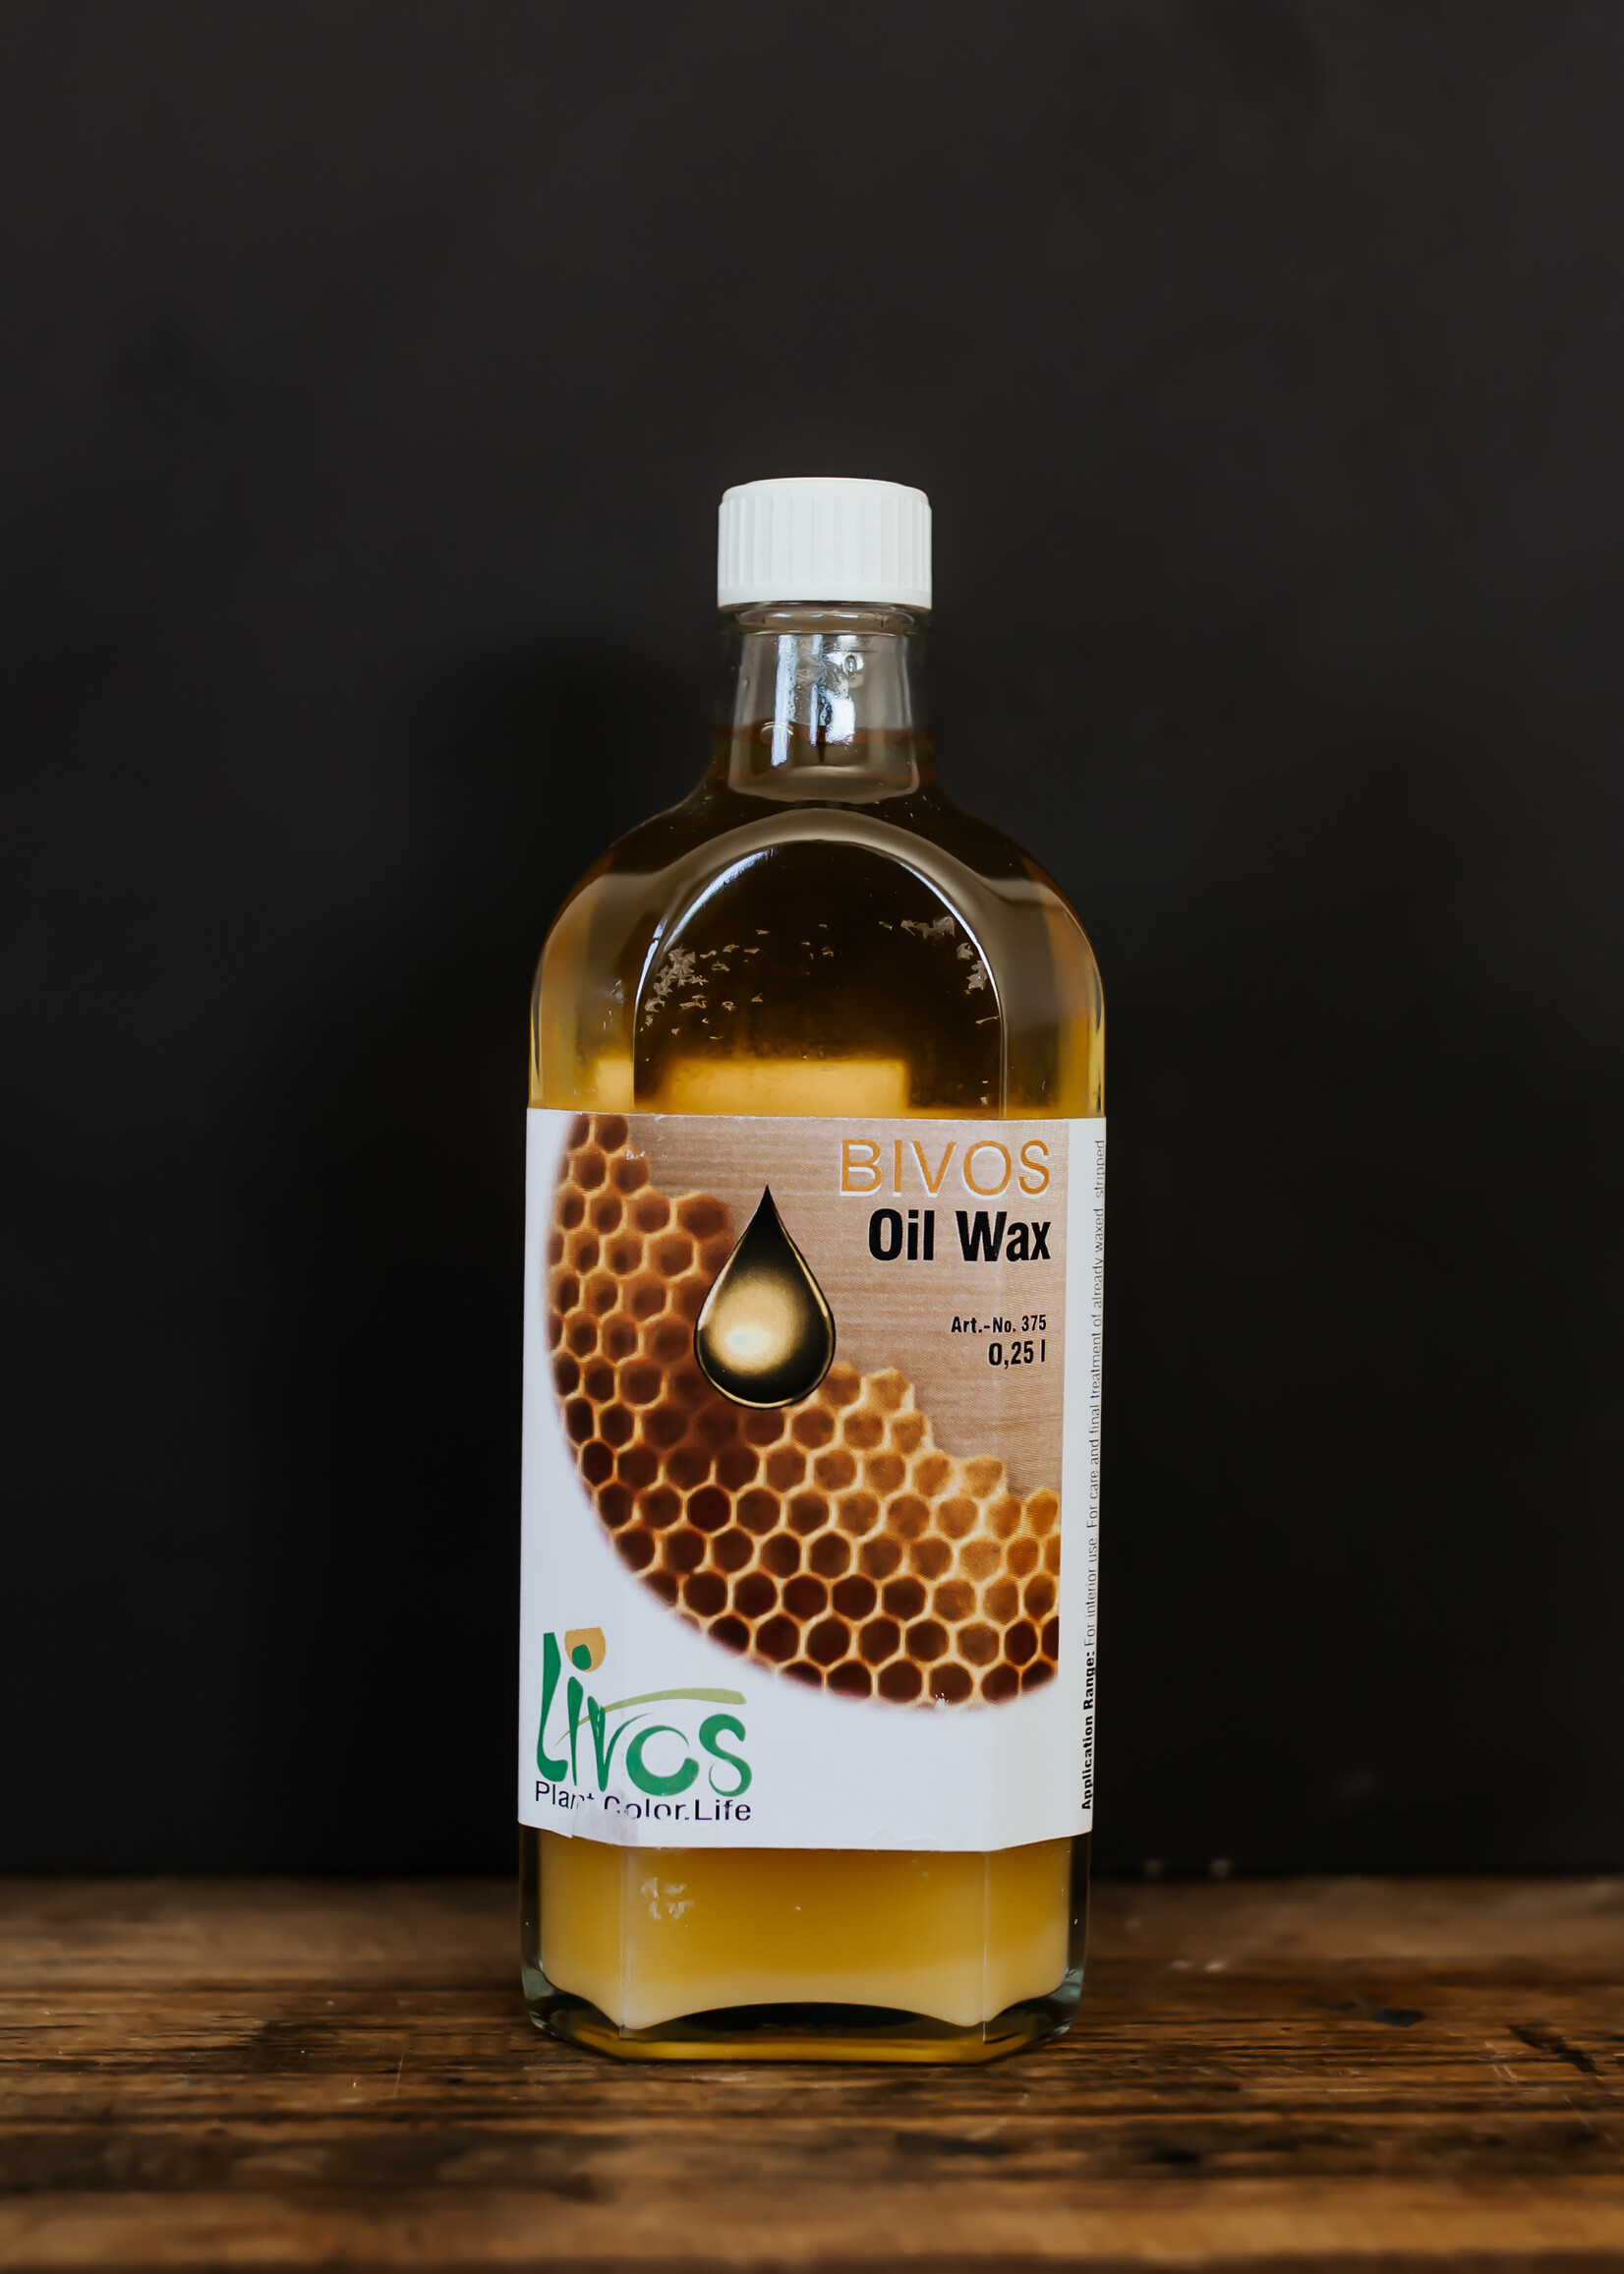 LIVOS Bivos Oil Wax